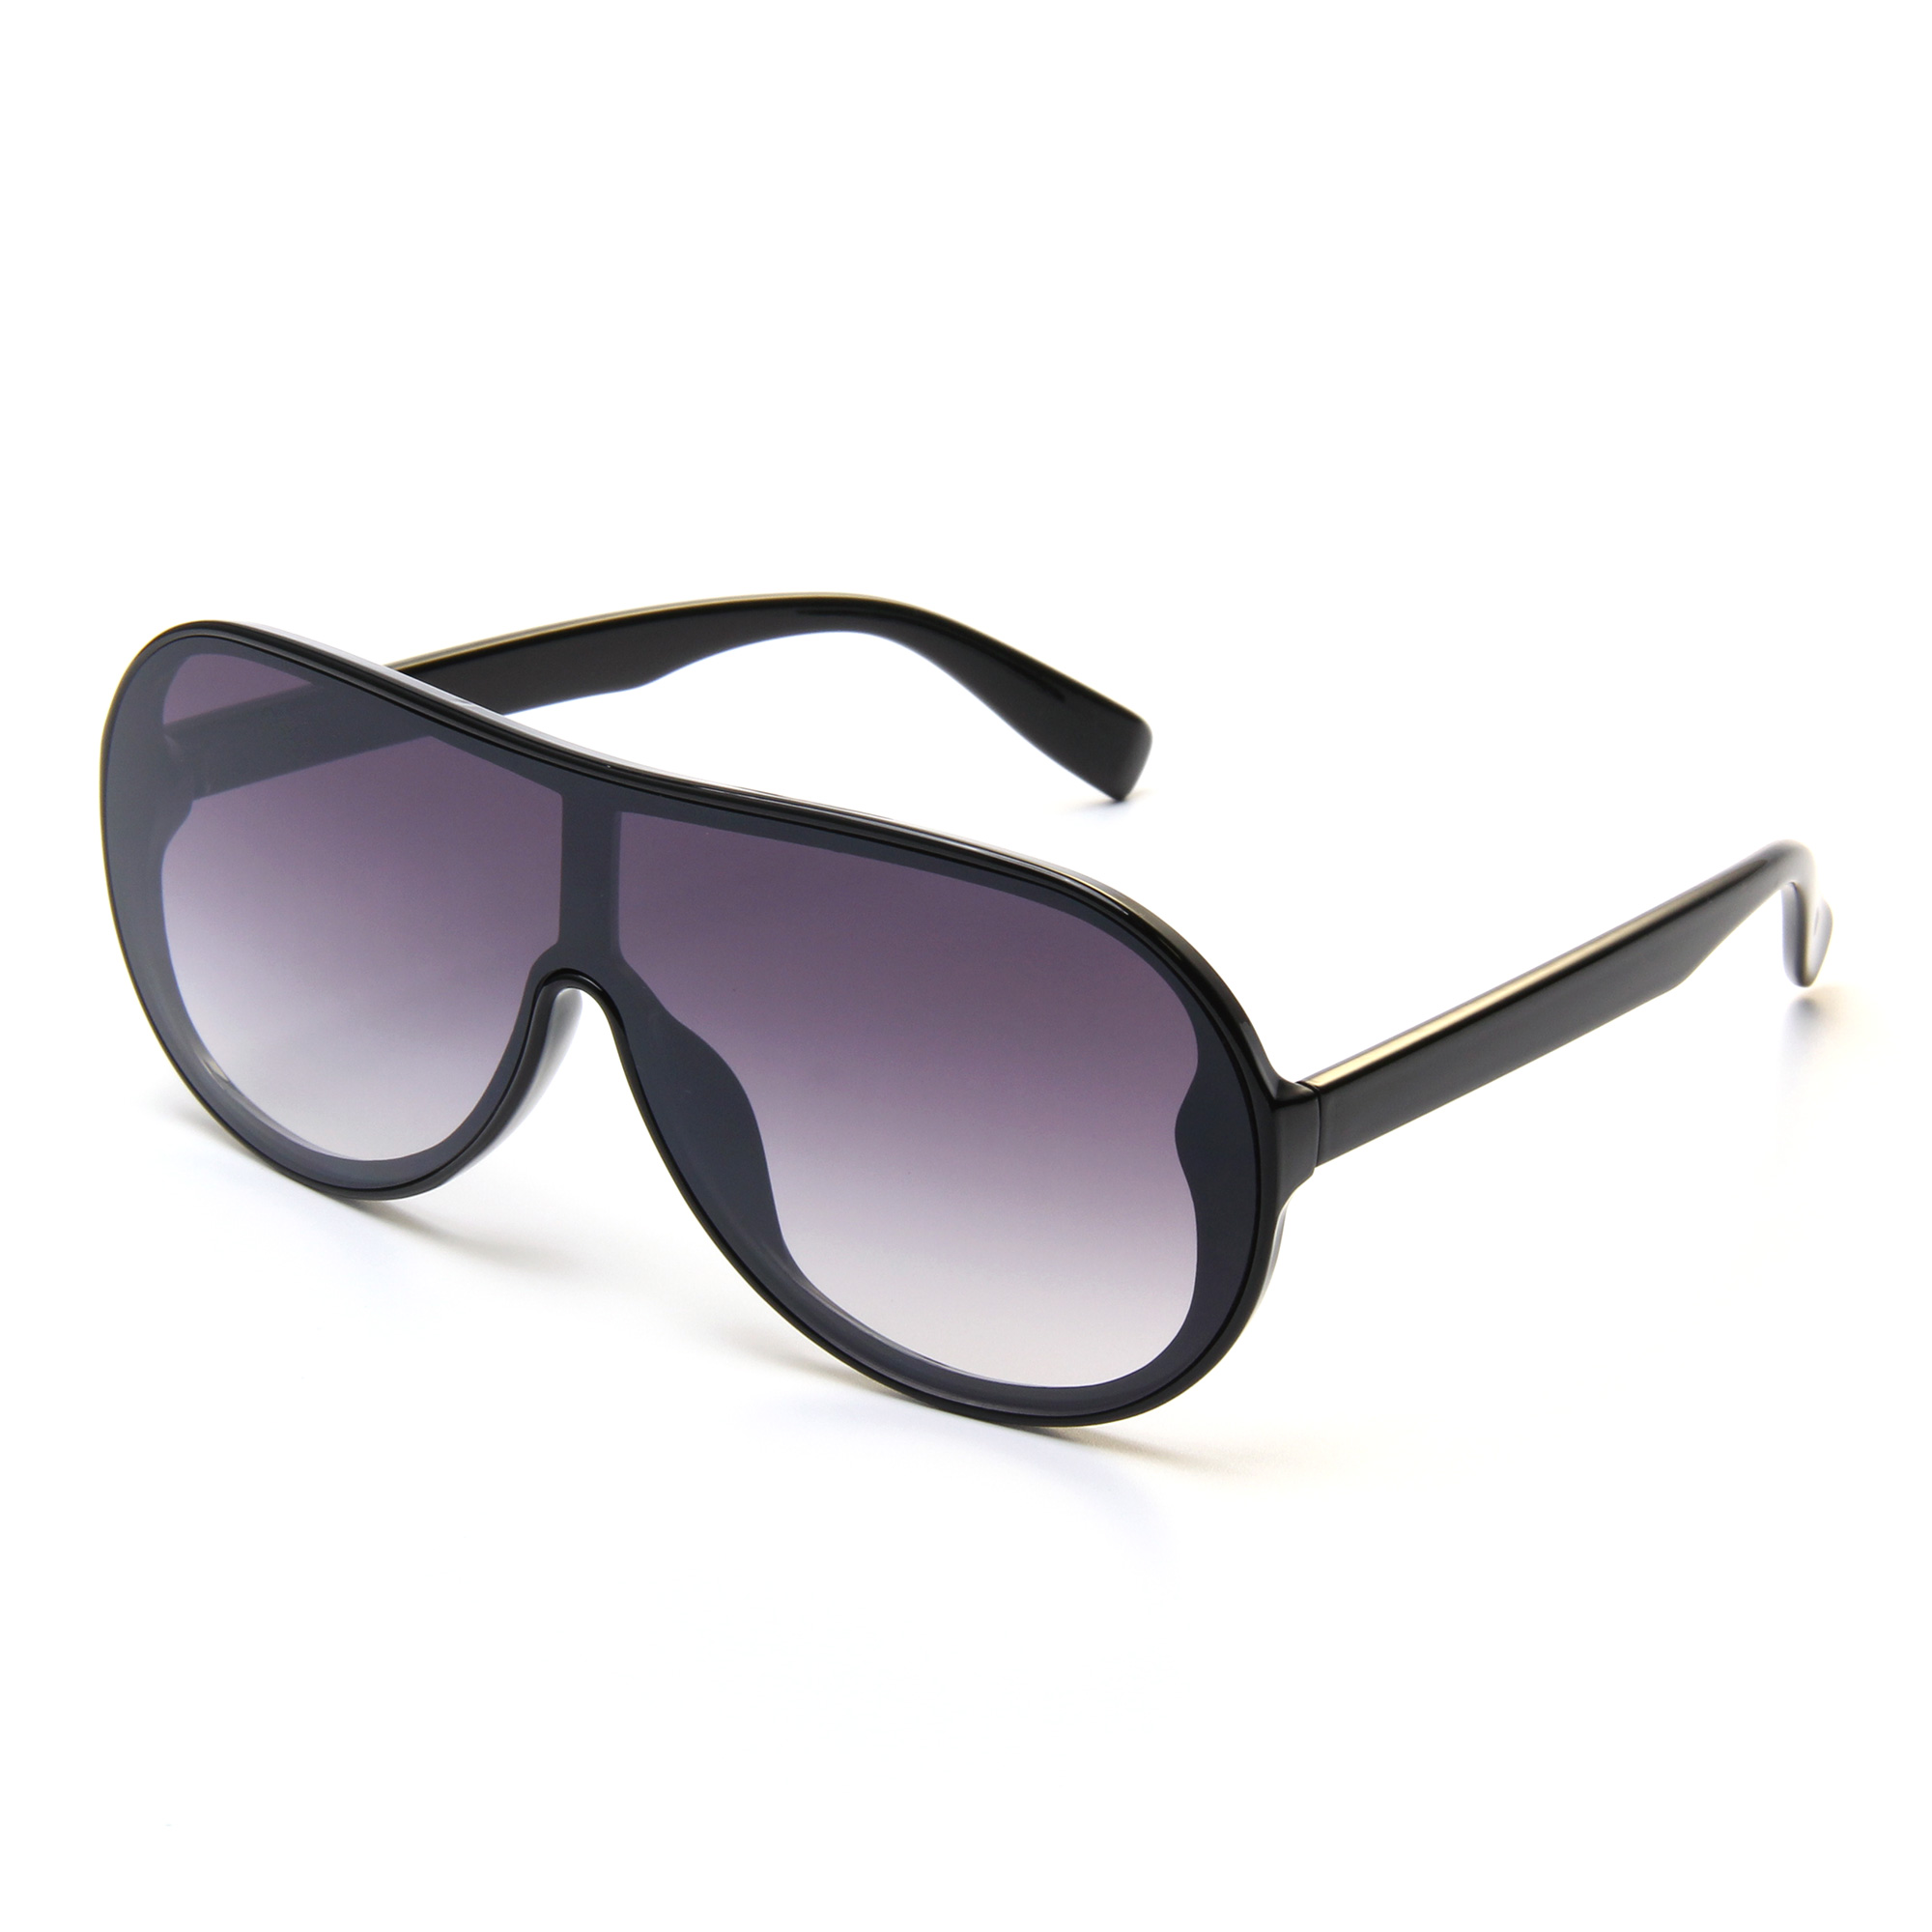 Eugenia unisex polarized sunglasses factory for gift-2